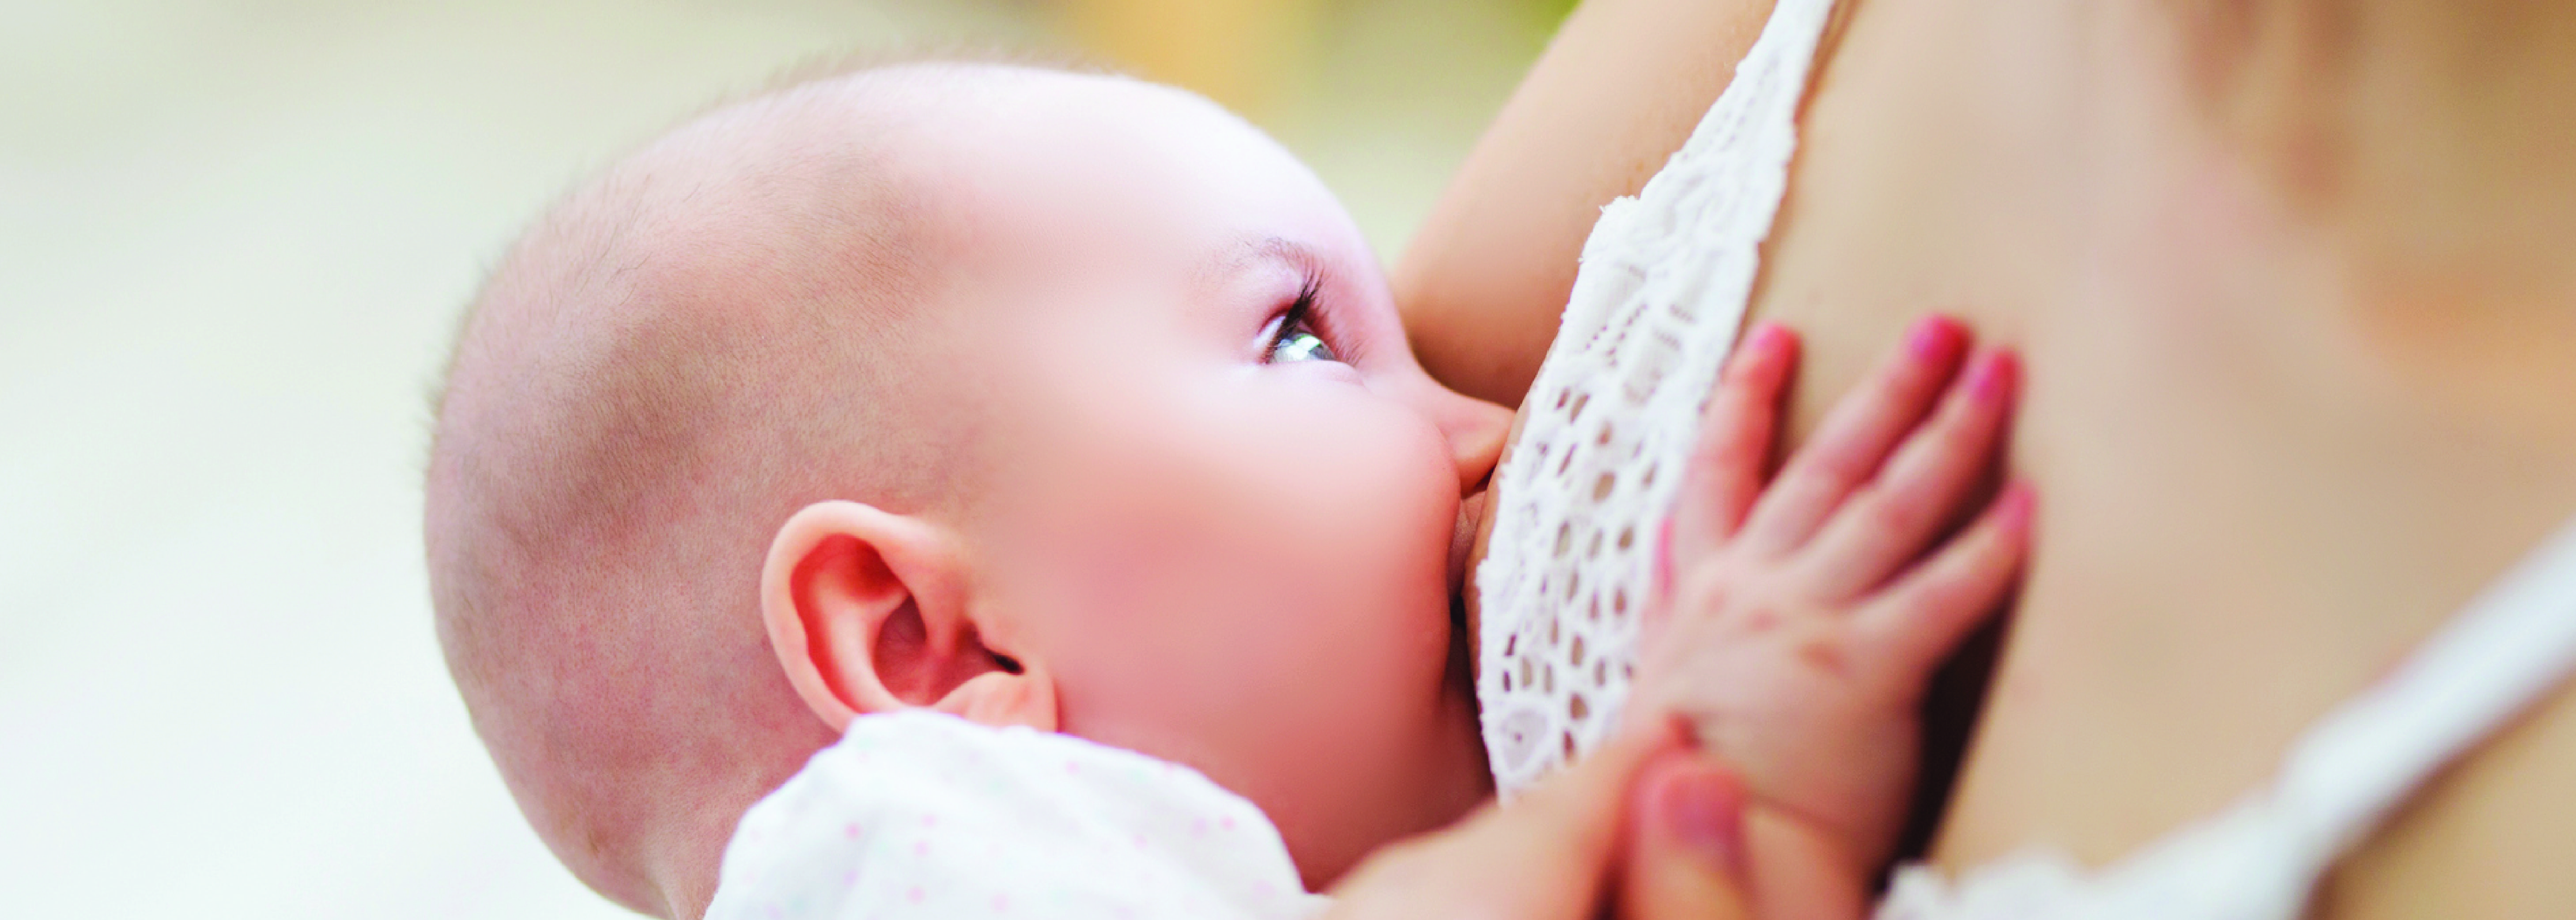 Baby breastfeeding on mother